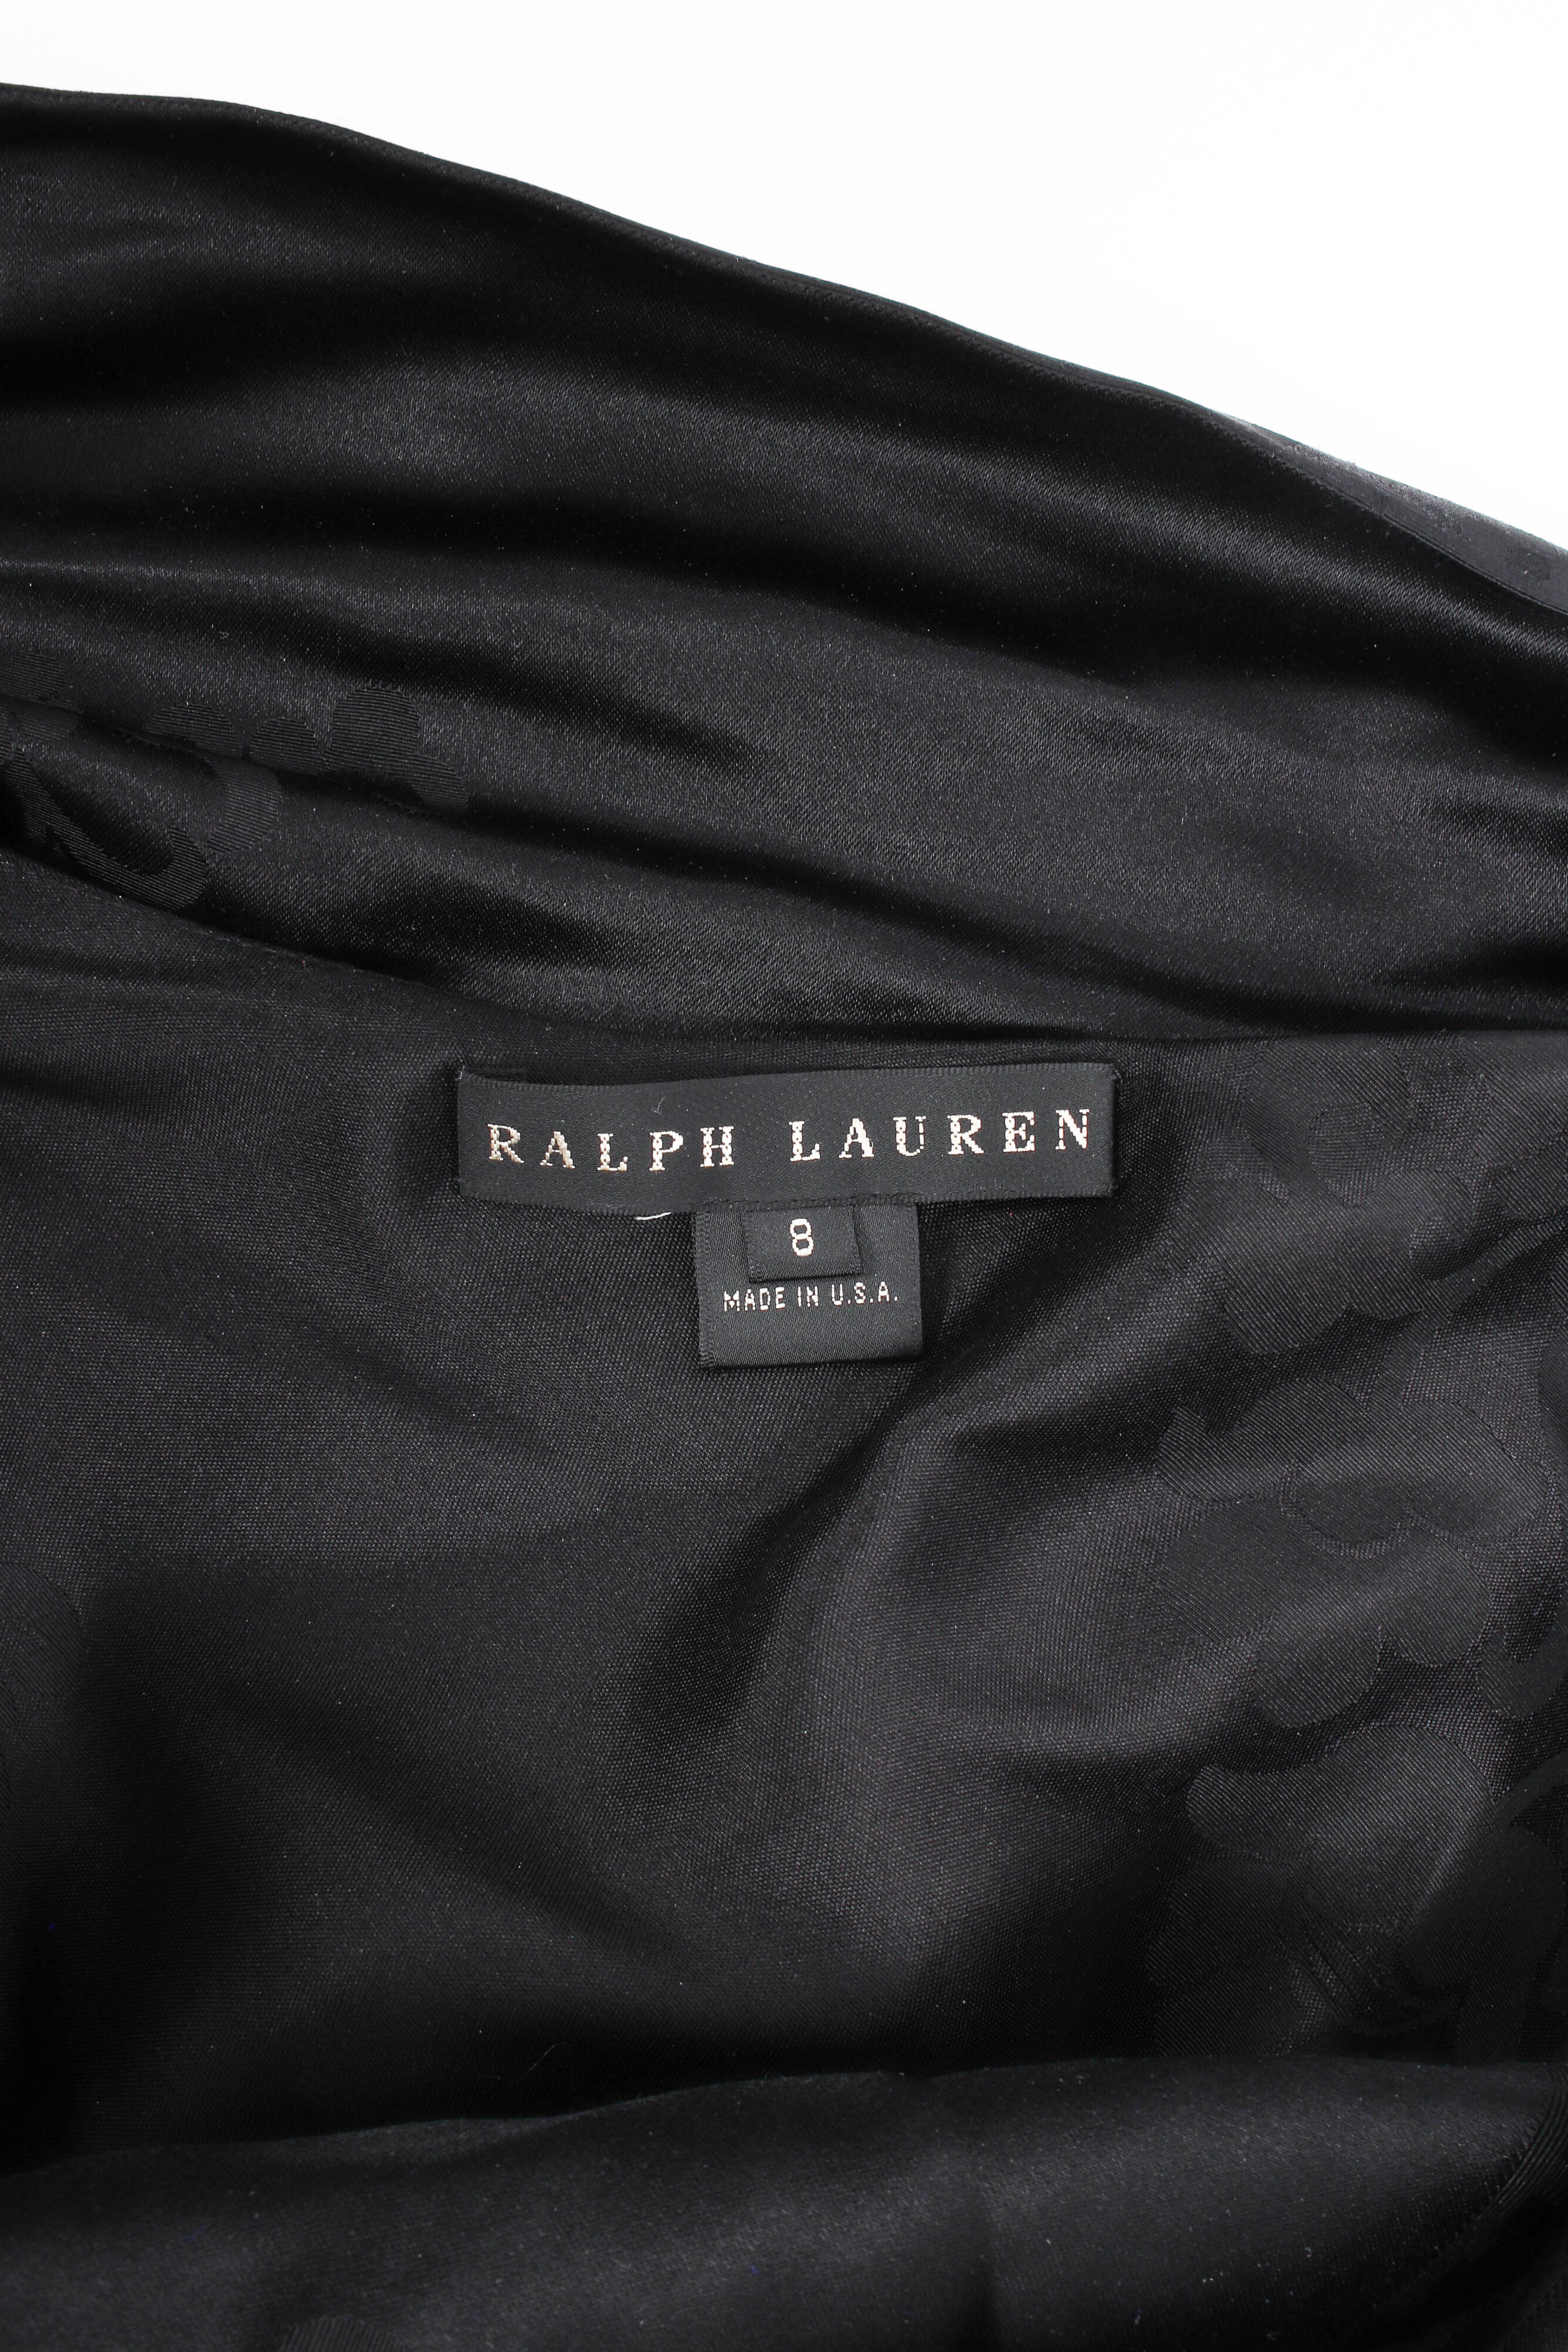 Vintage Ralph Lauren Piano Shawl Fringe Skirt tag detail @ Recess LA